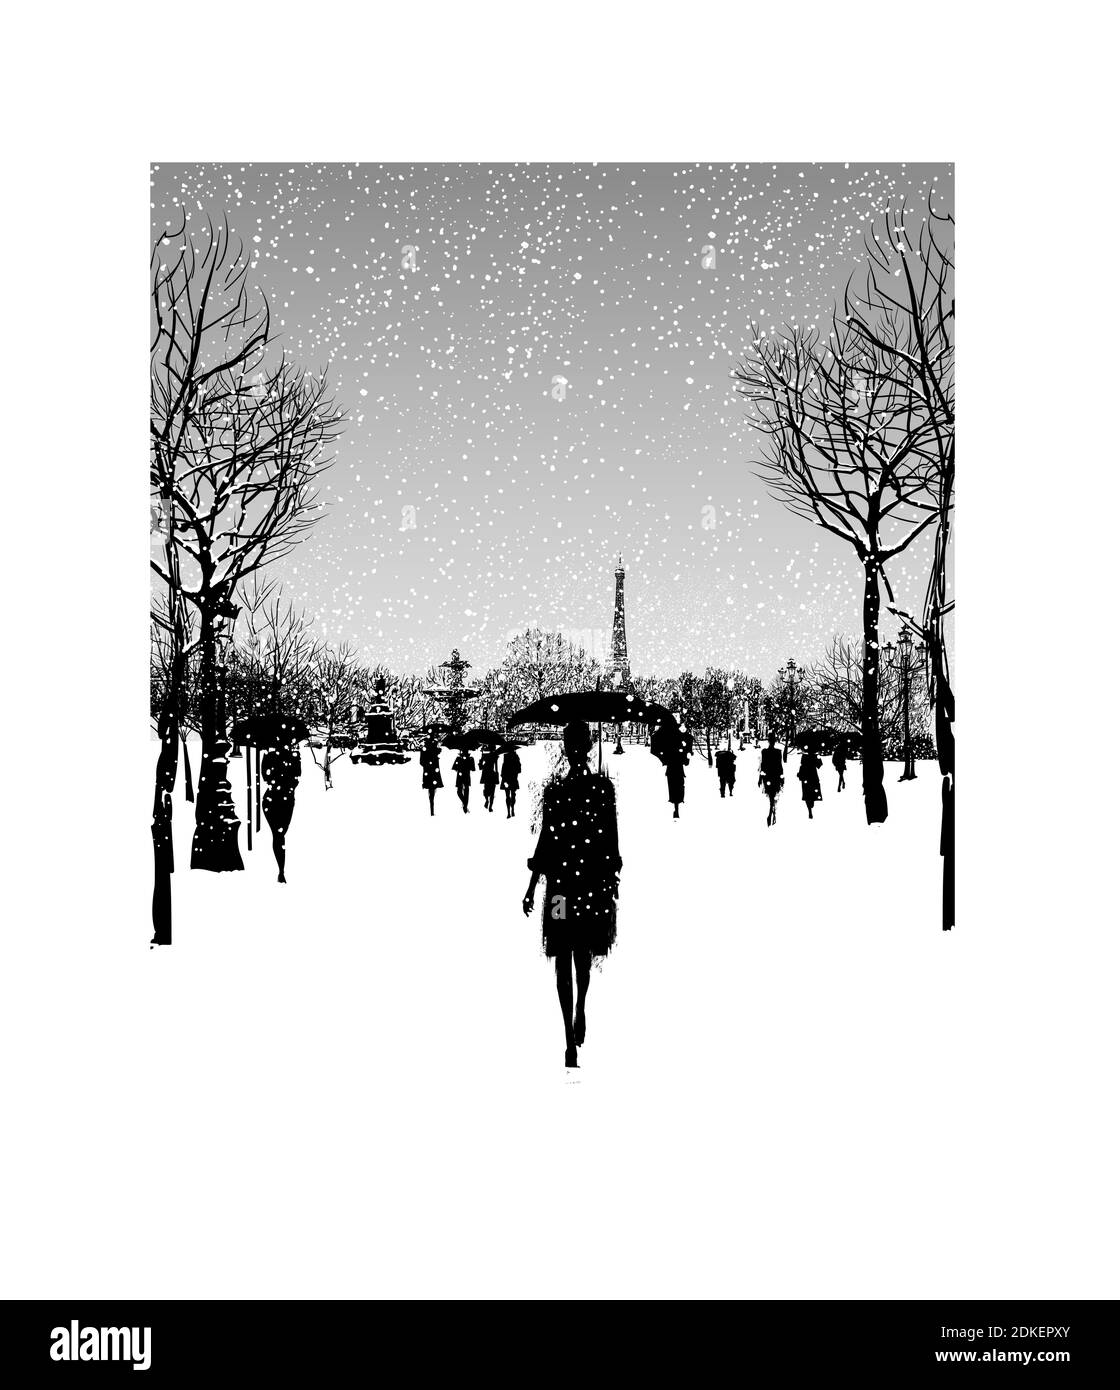 Place de la concorde and eiffel tower under snow, Paris, France - vector illustration Stock Vector